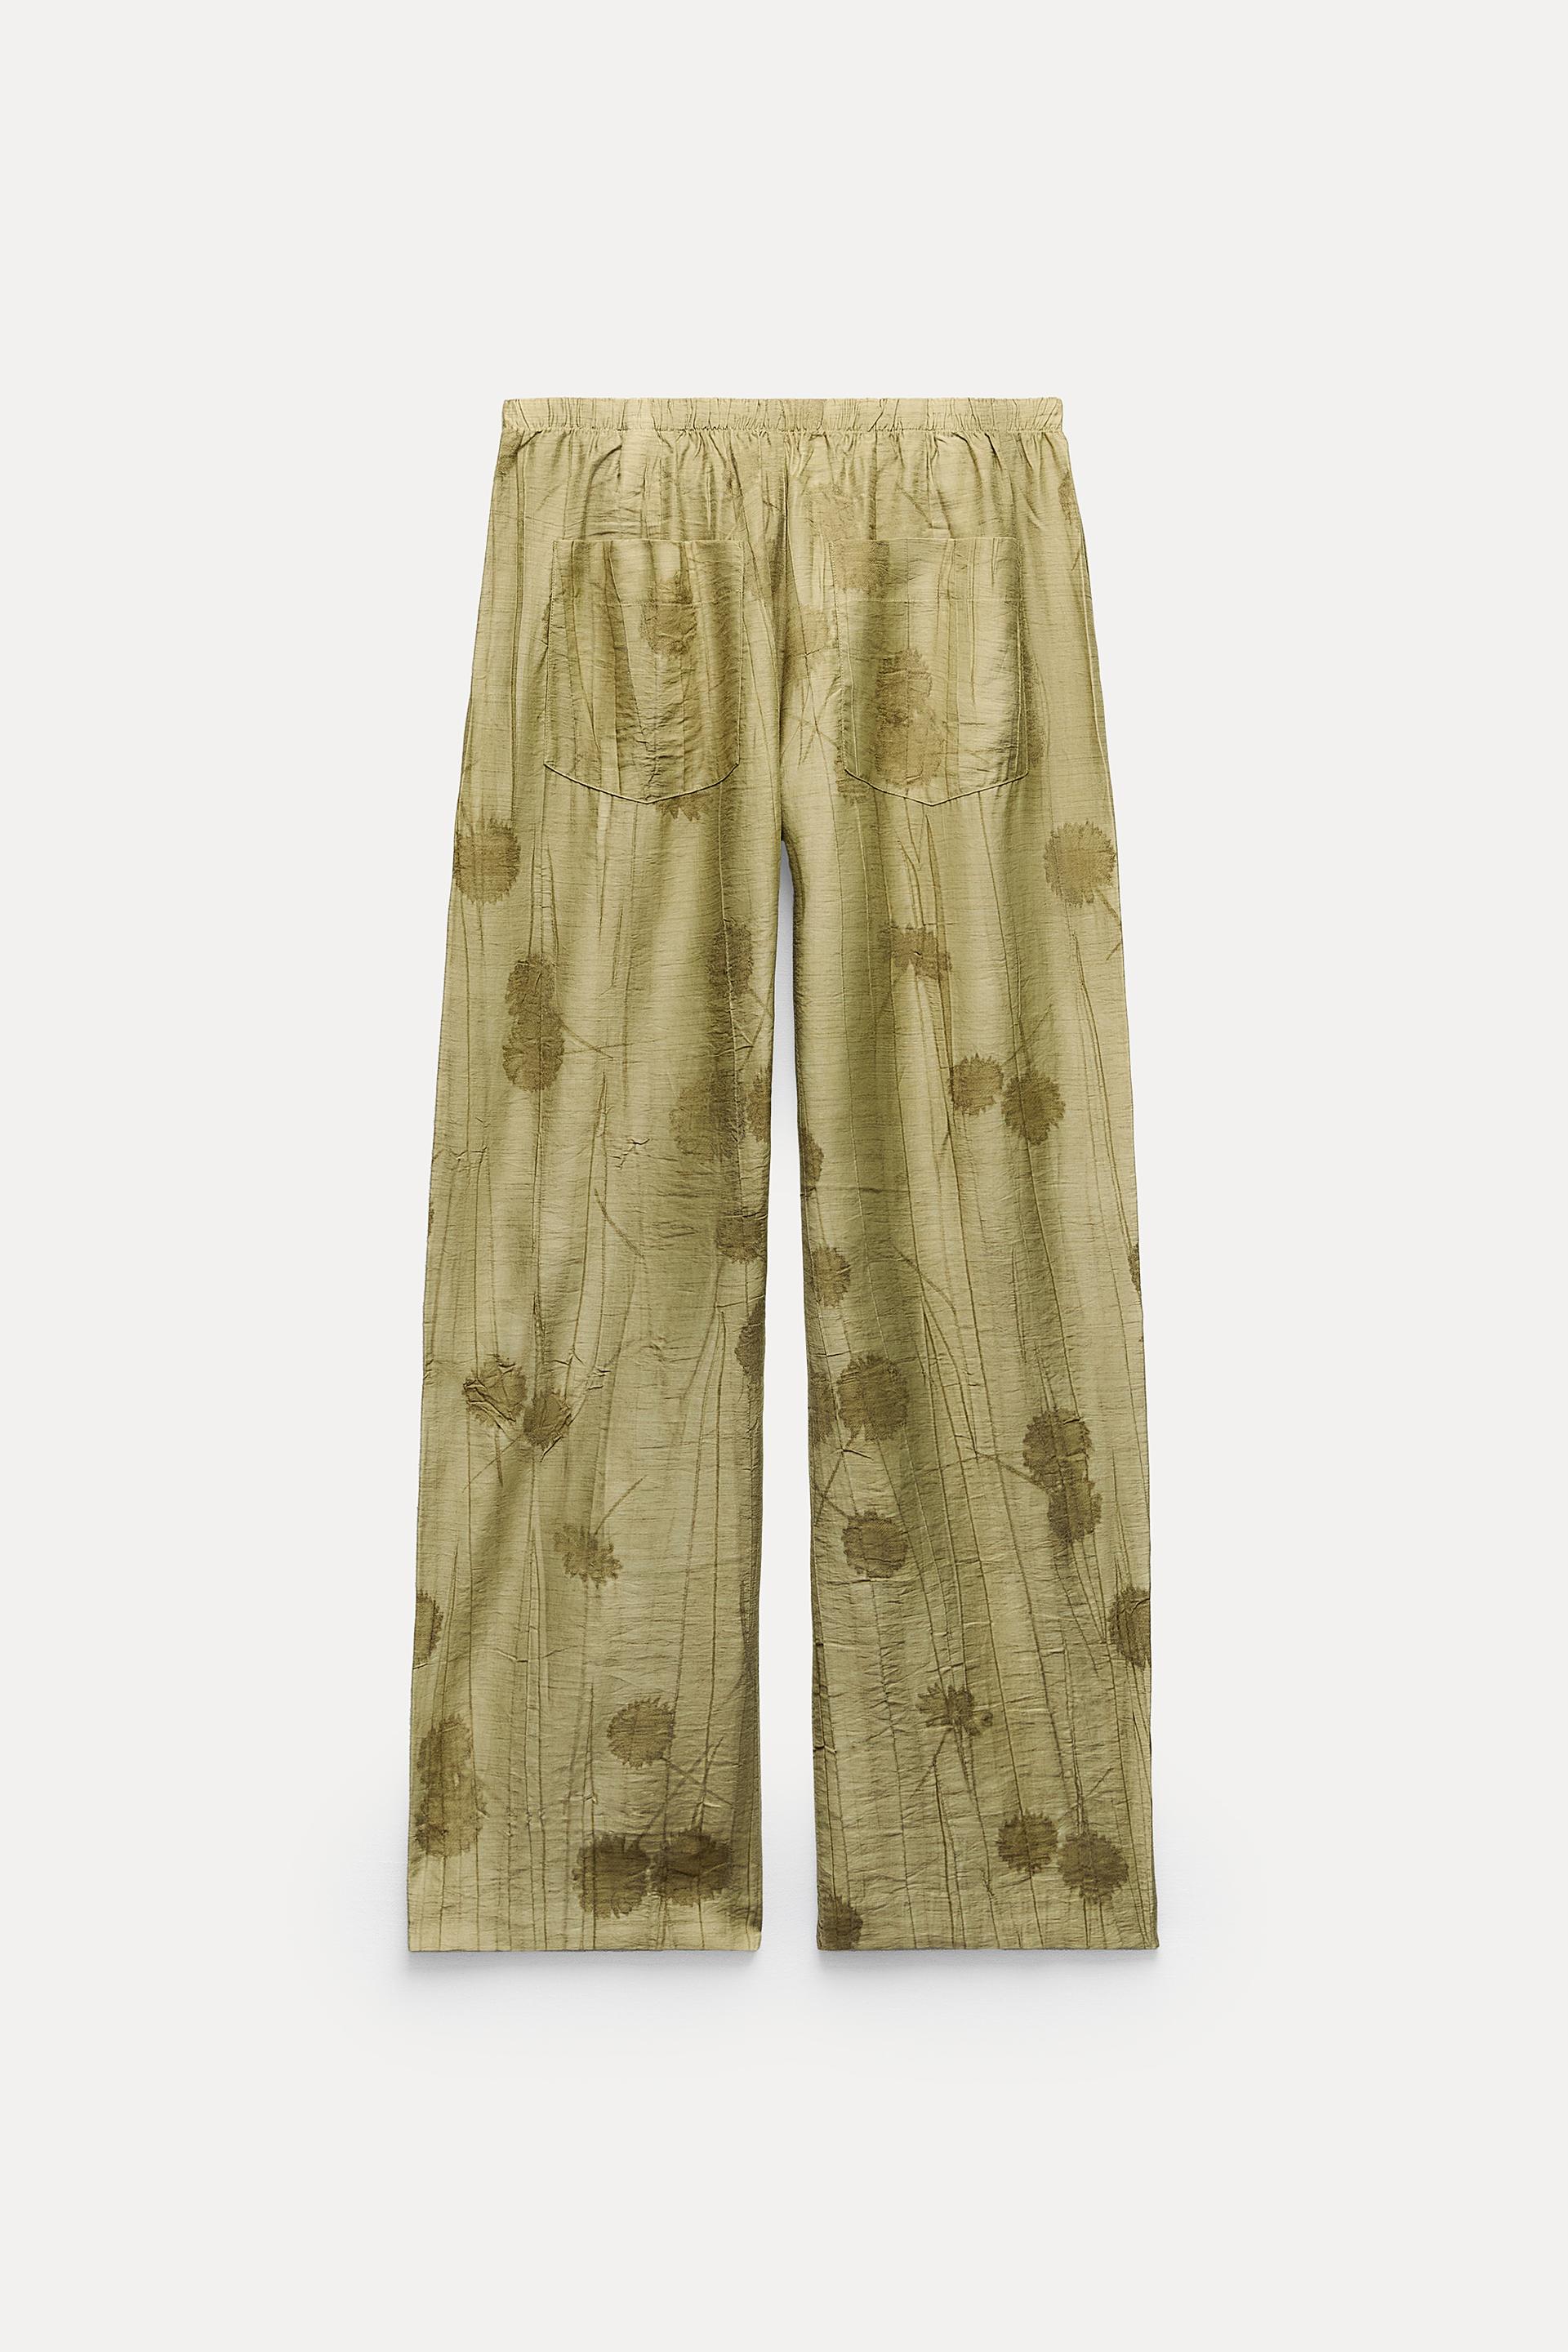 Alfani Womens Jacquard Print Casual Trouser Pants, Green, 6